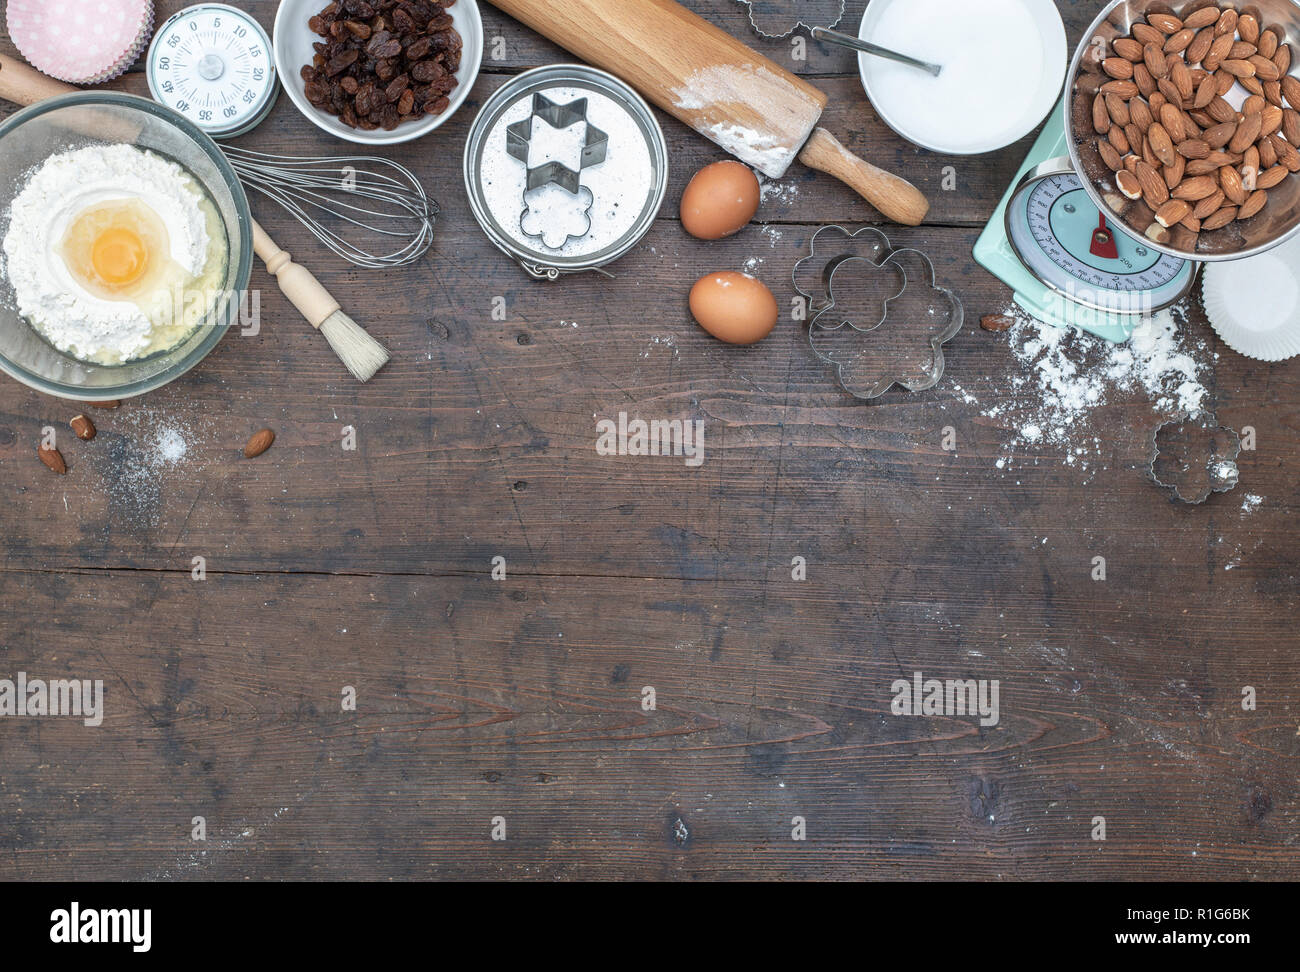 Home cottura cucina impostazione con ingredienti per pane e torte di coppa Foto Stock